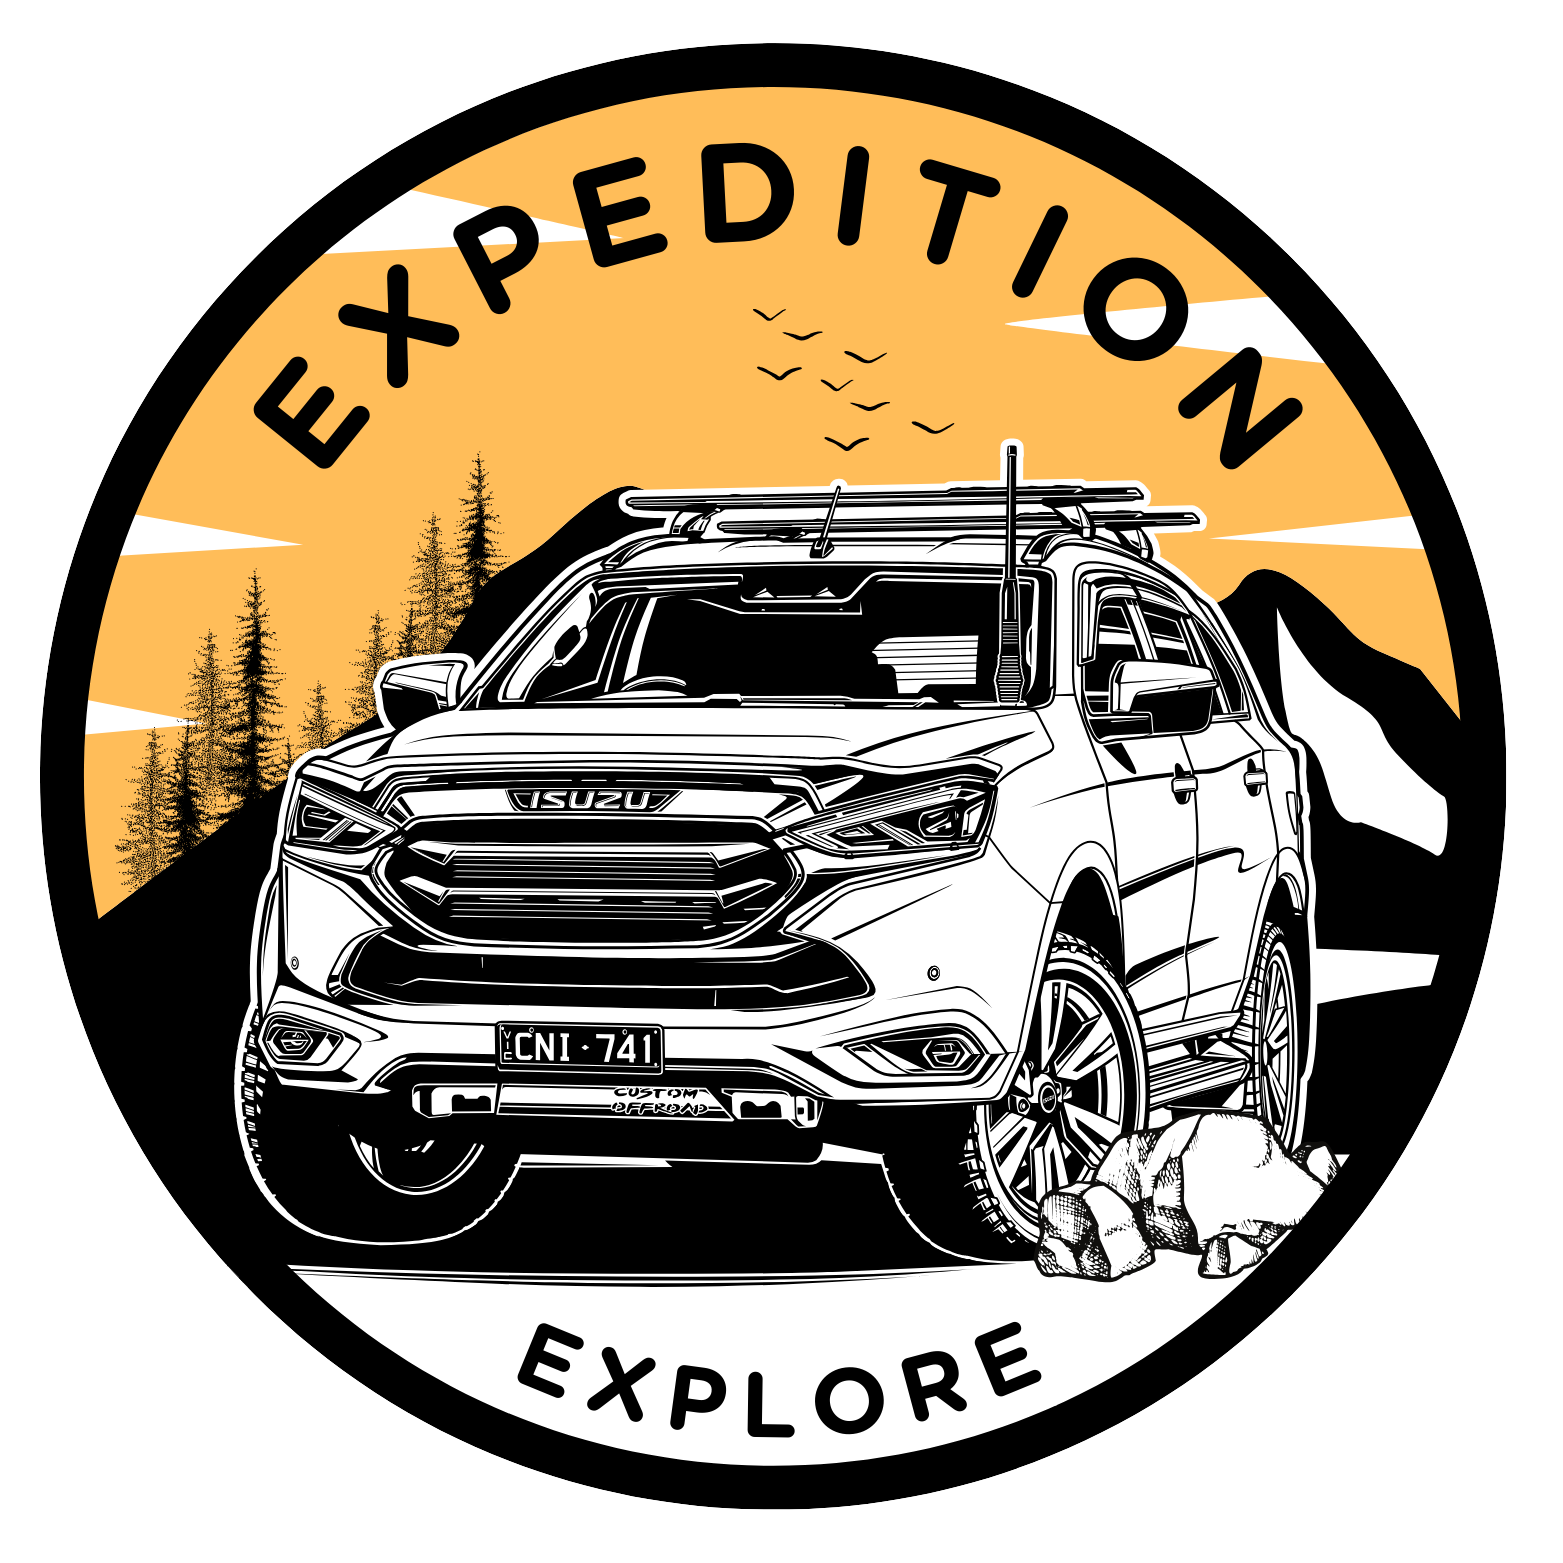 Expedition Explore